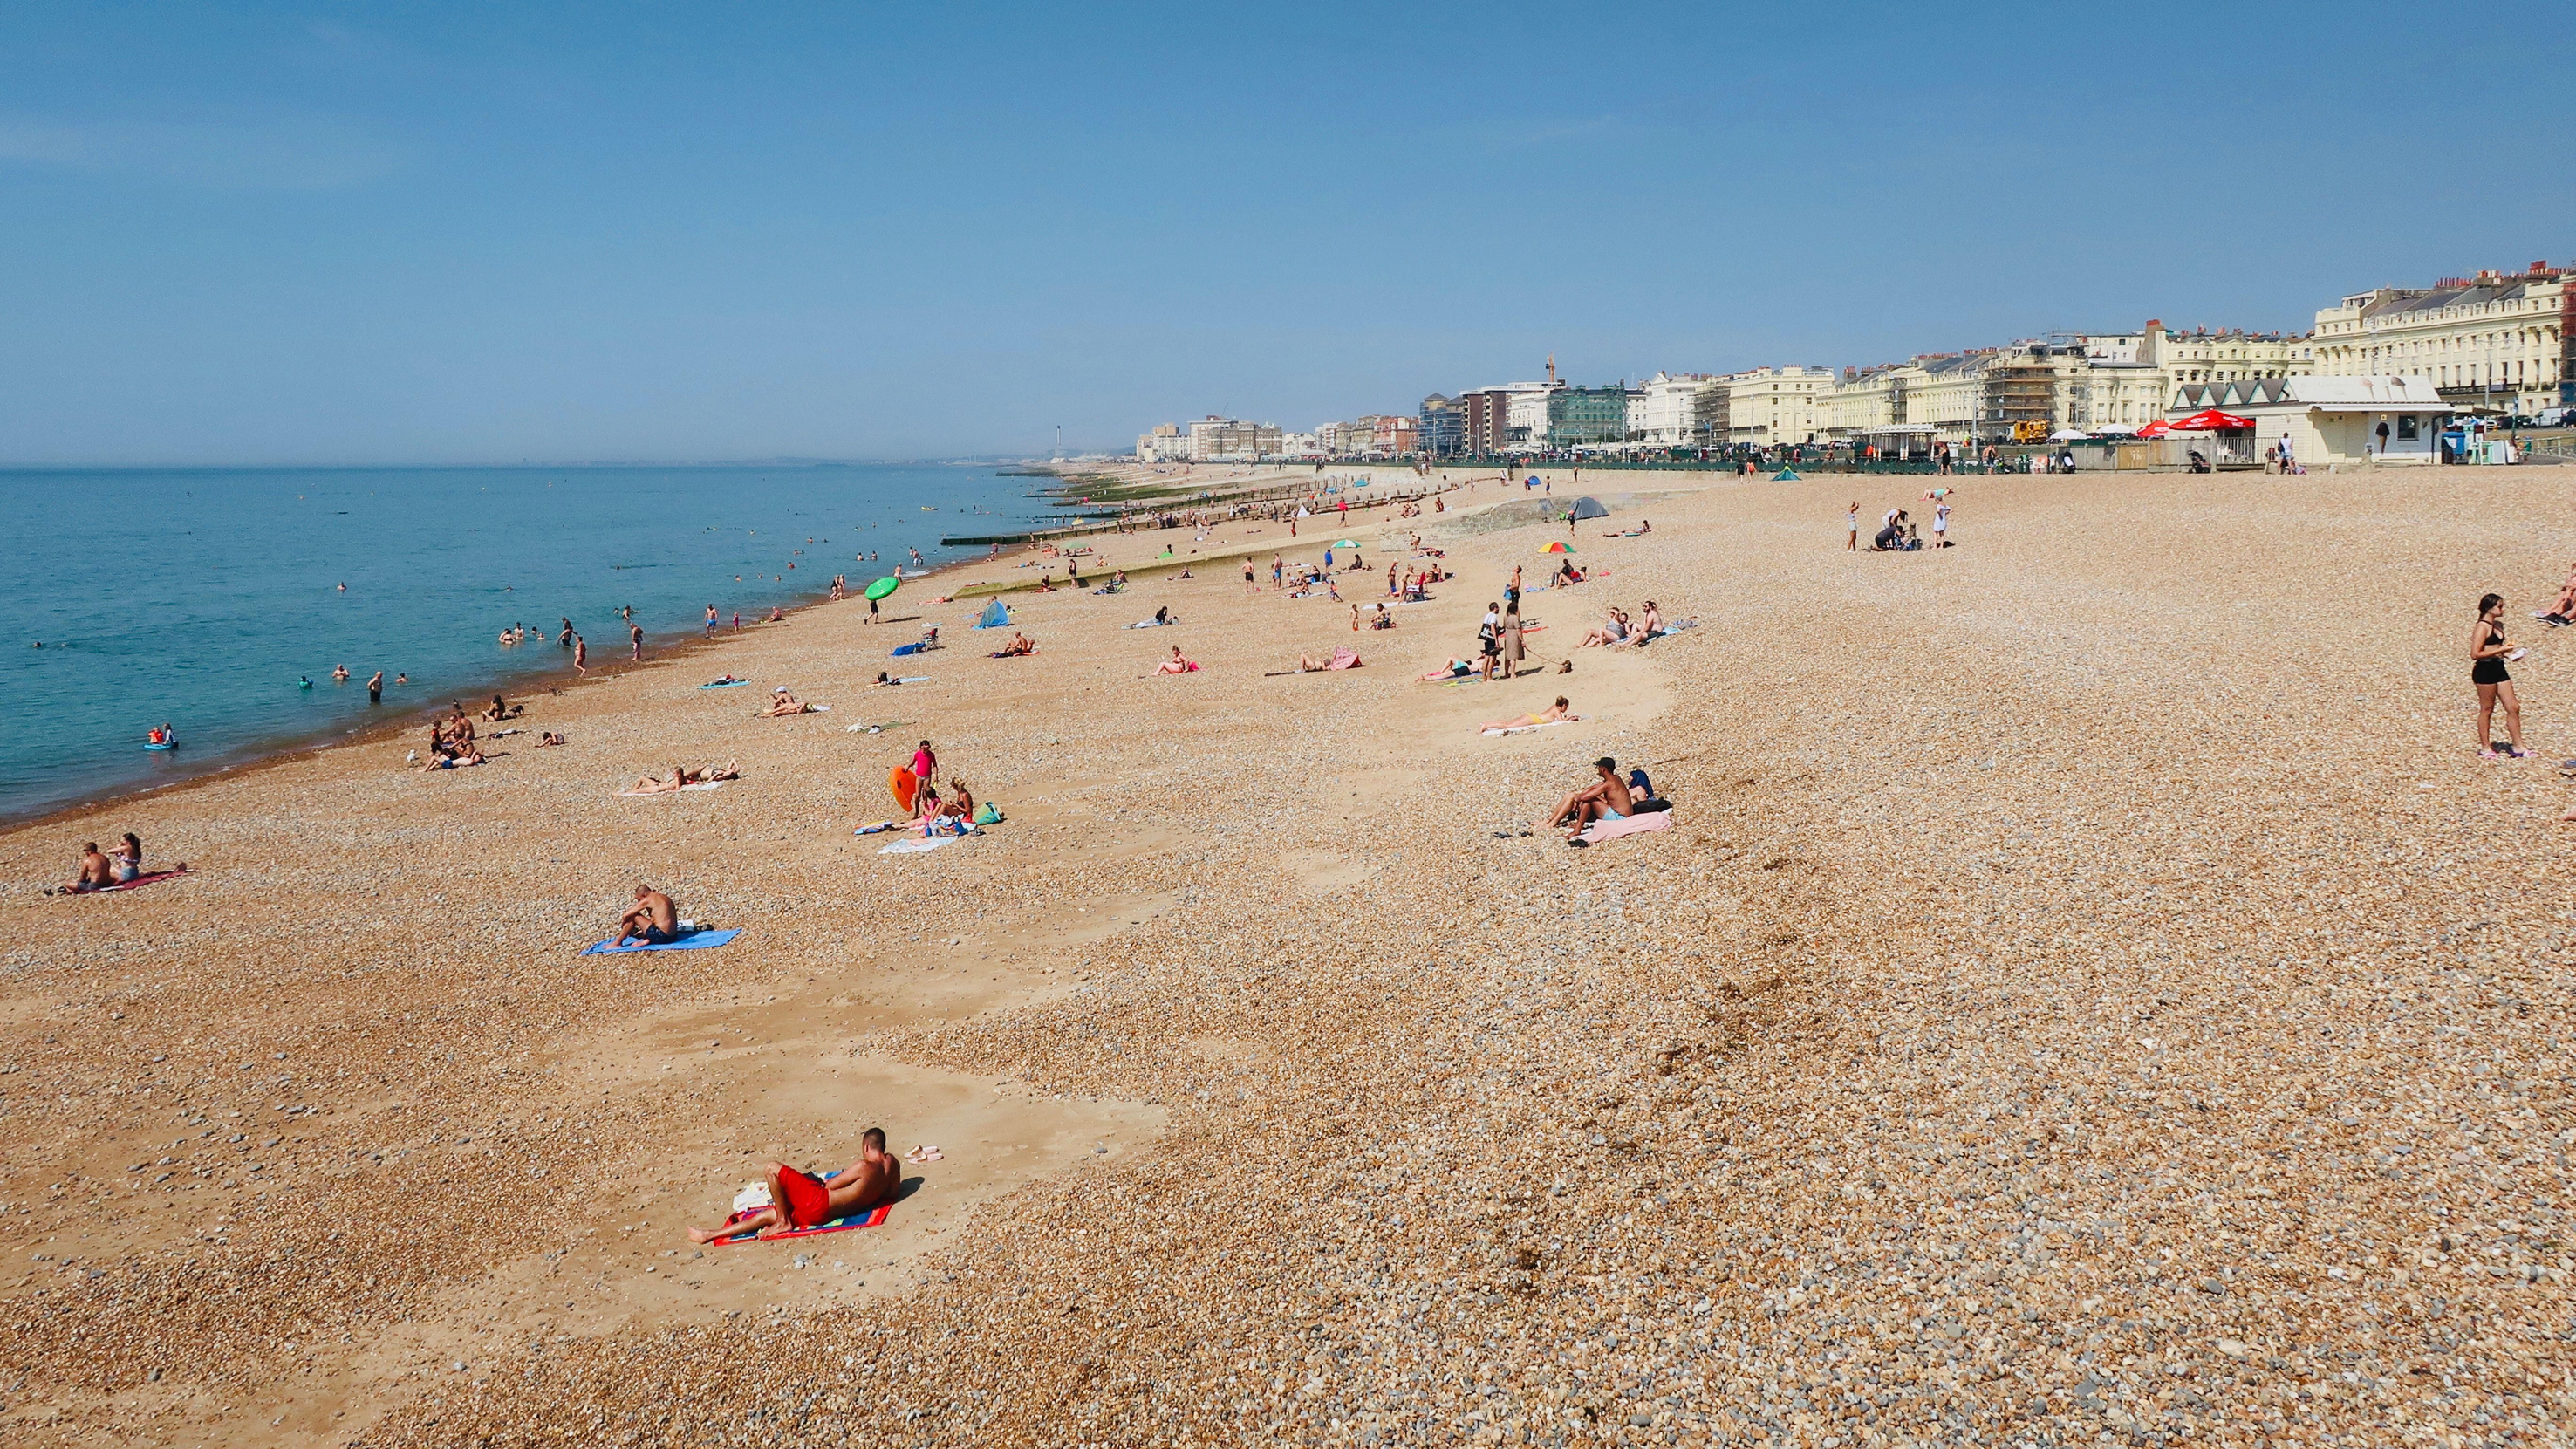 People enjoying themselves on Brighton beach